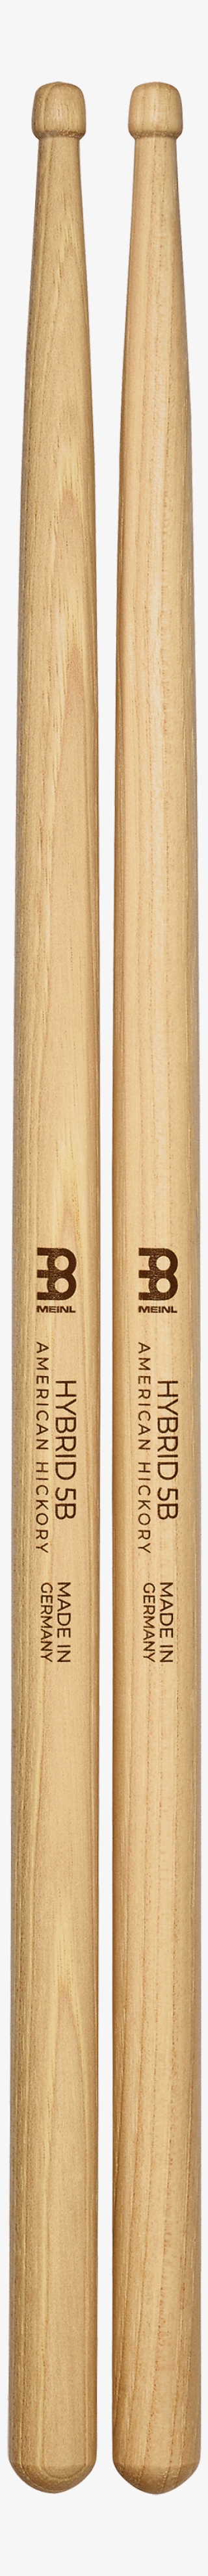 Meinl 5b Hybrid Drumstick - Mobile Phone